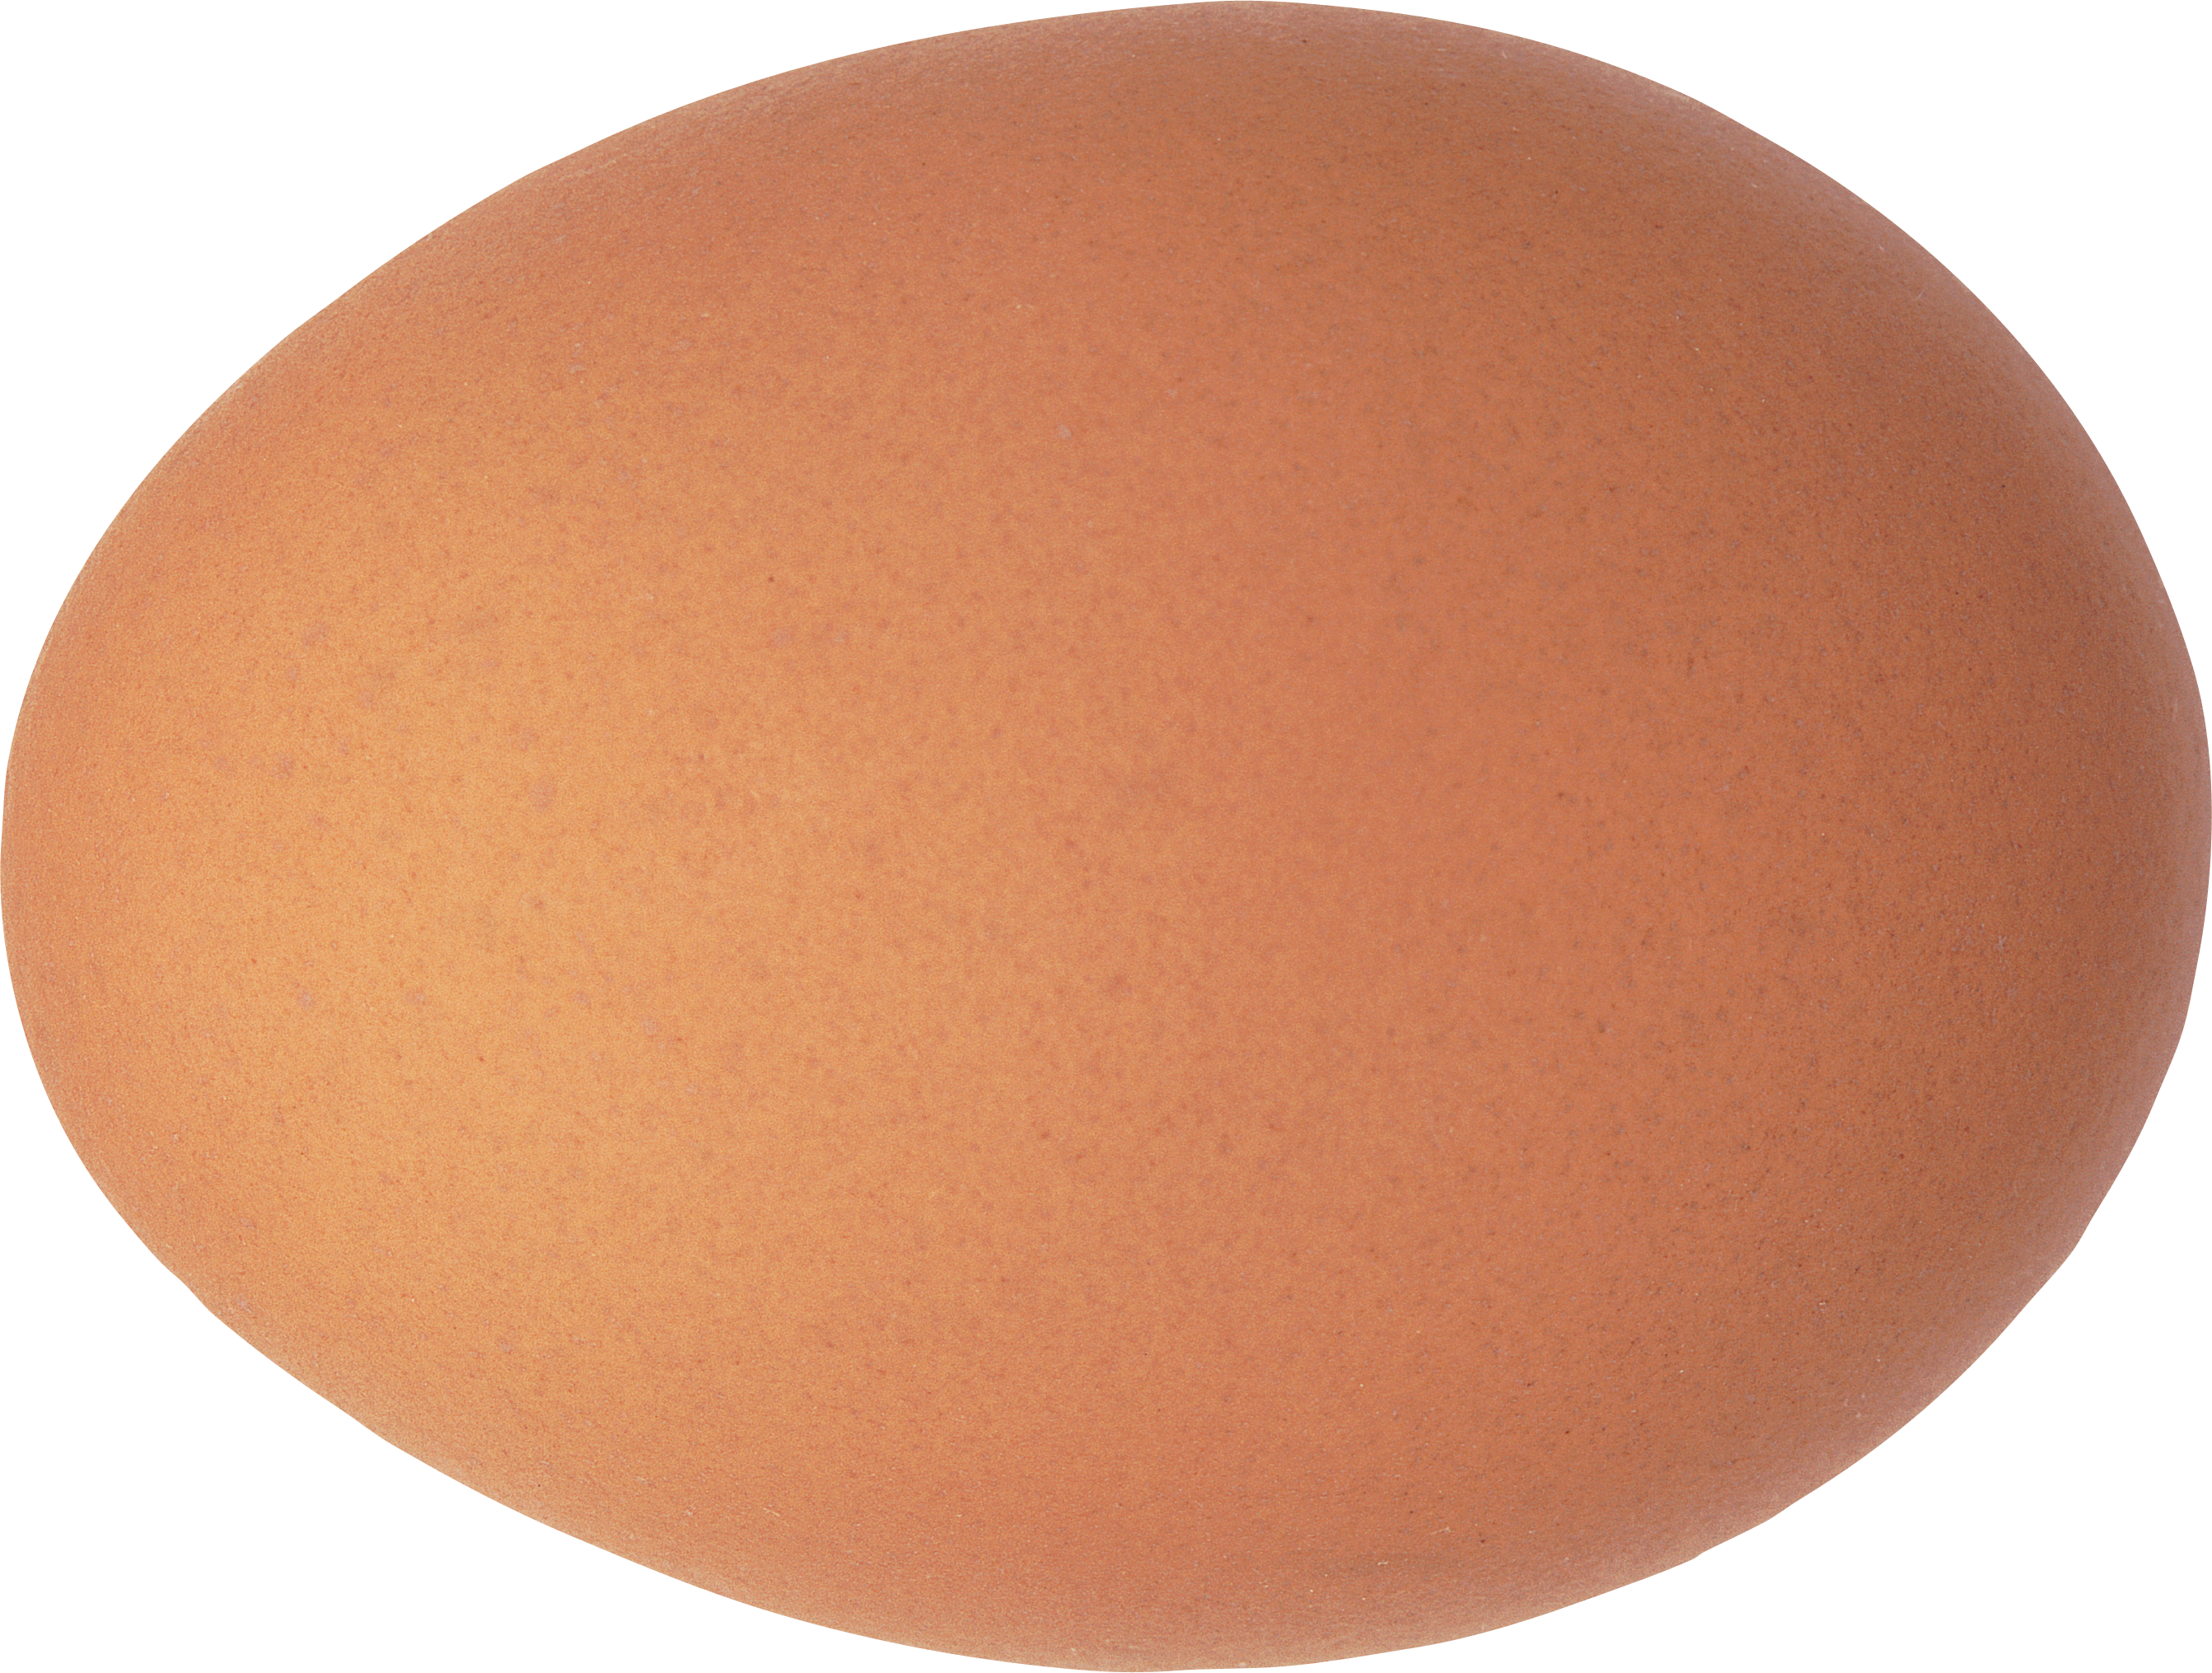 Huevos, huevo PNG